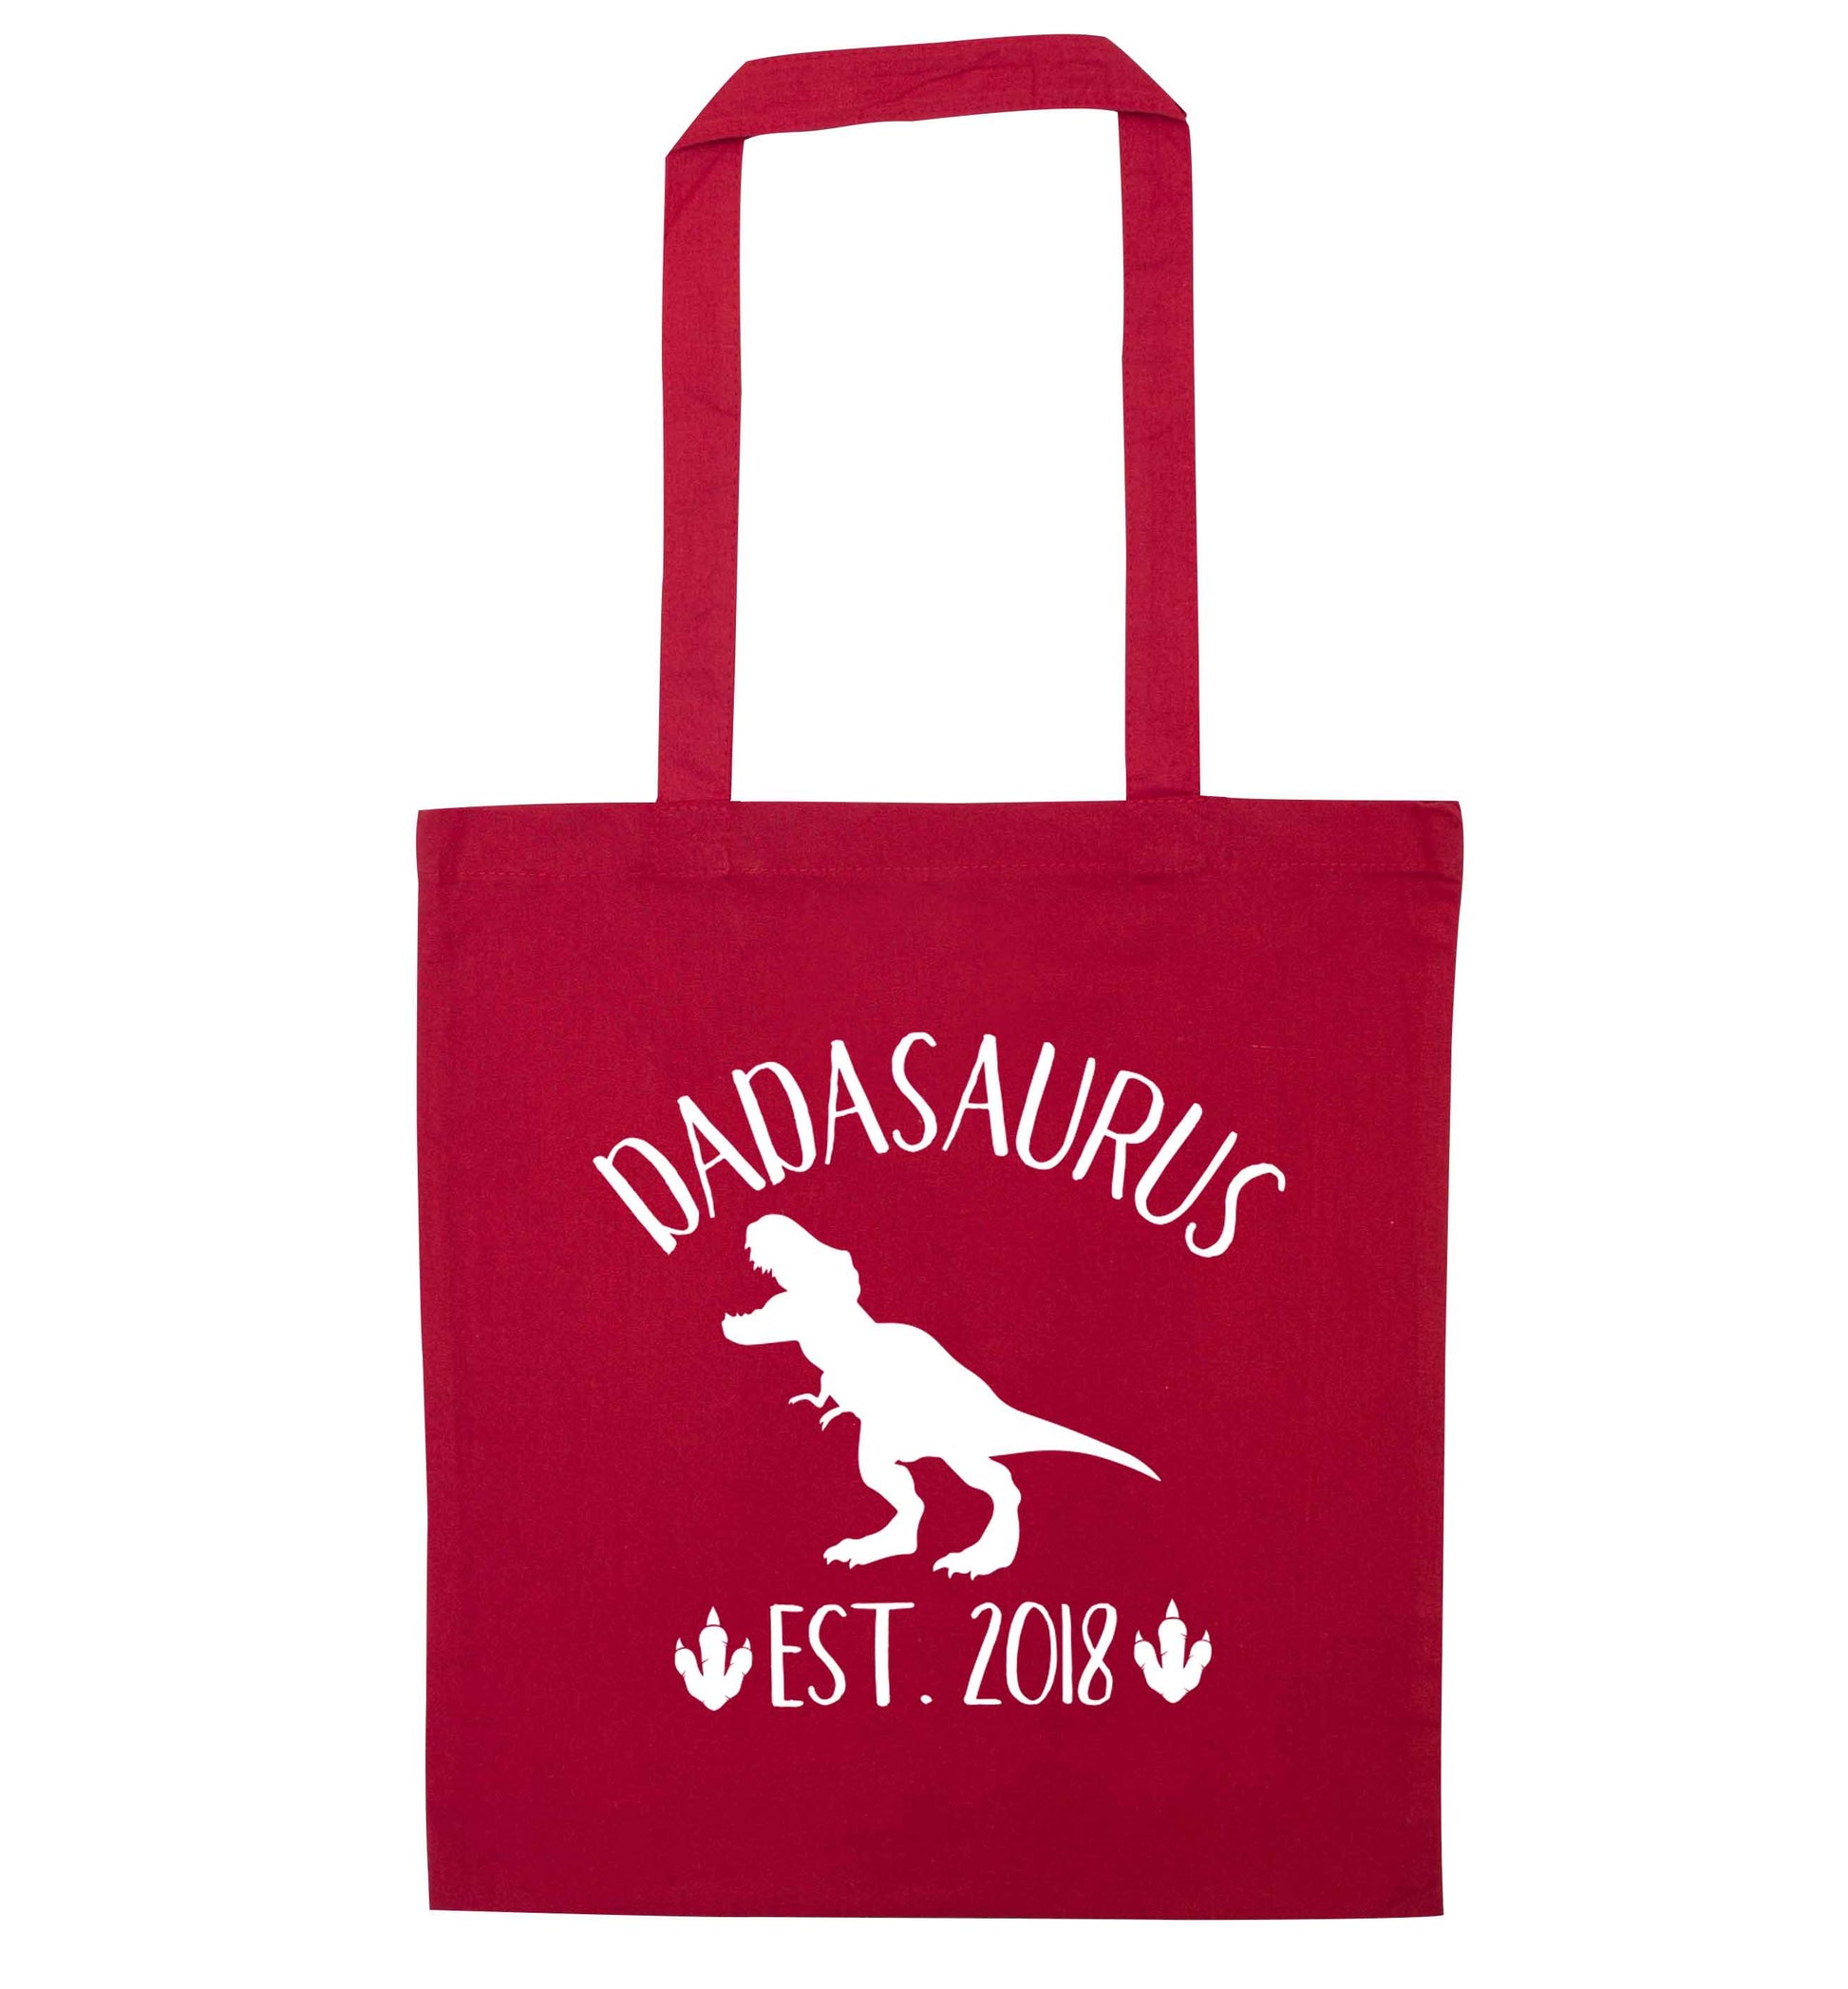 Personalised dadasaurus since (custom date) red tote bag